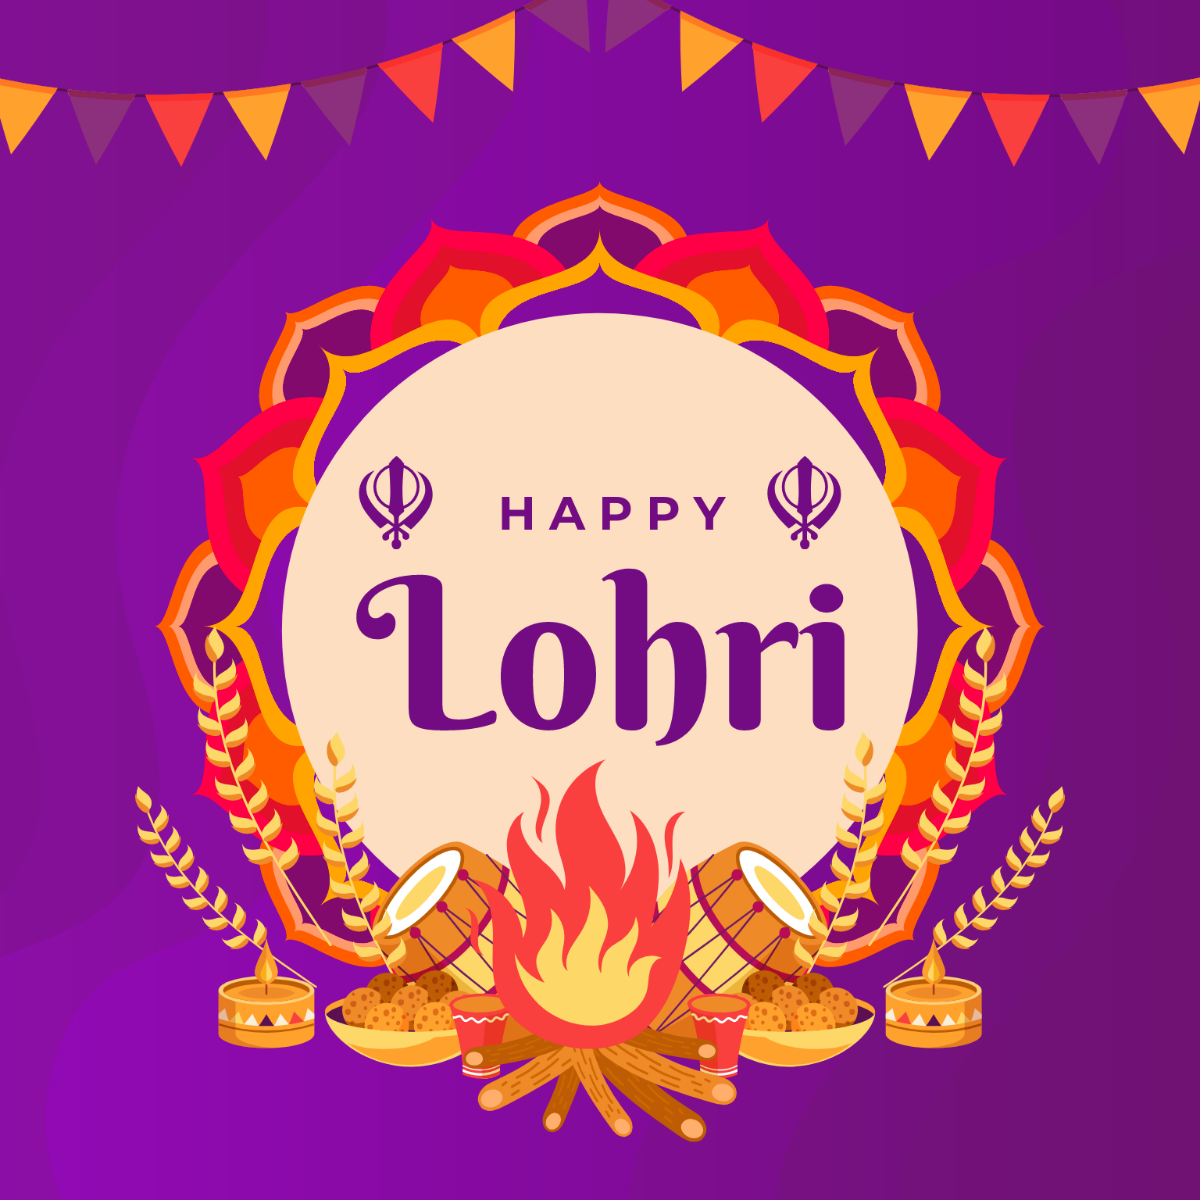 Lohri Drawing|Happy Lohri Drawing|Lohri poster|Happy Lohri poster Drawing| Lohri easyDrawing|Lohriday - YouTube